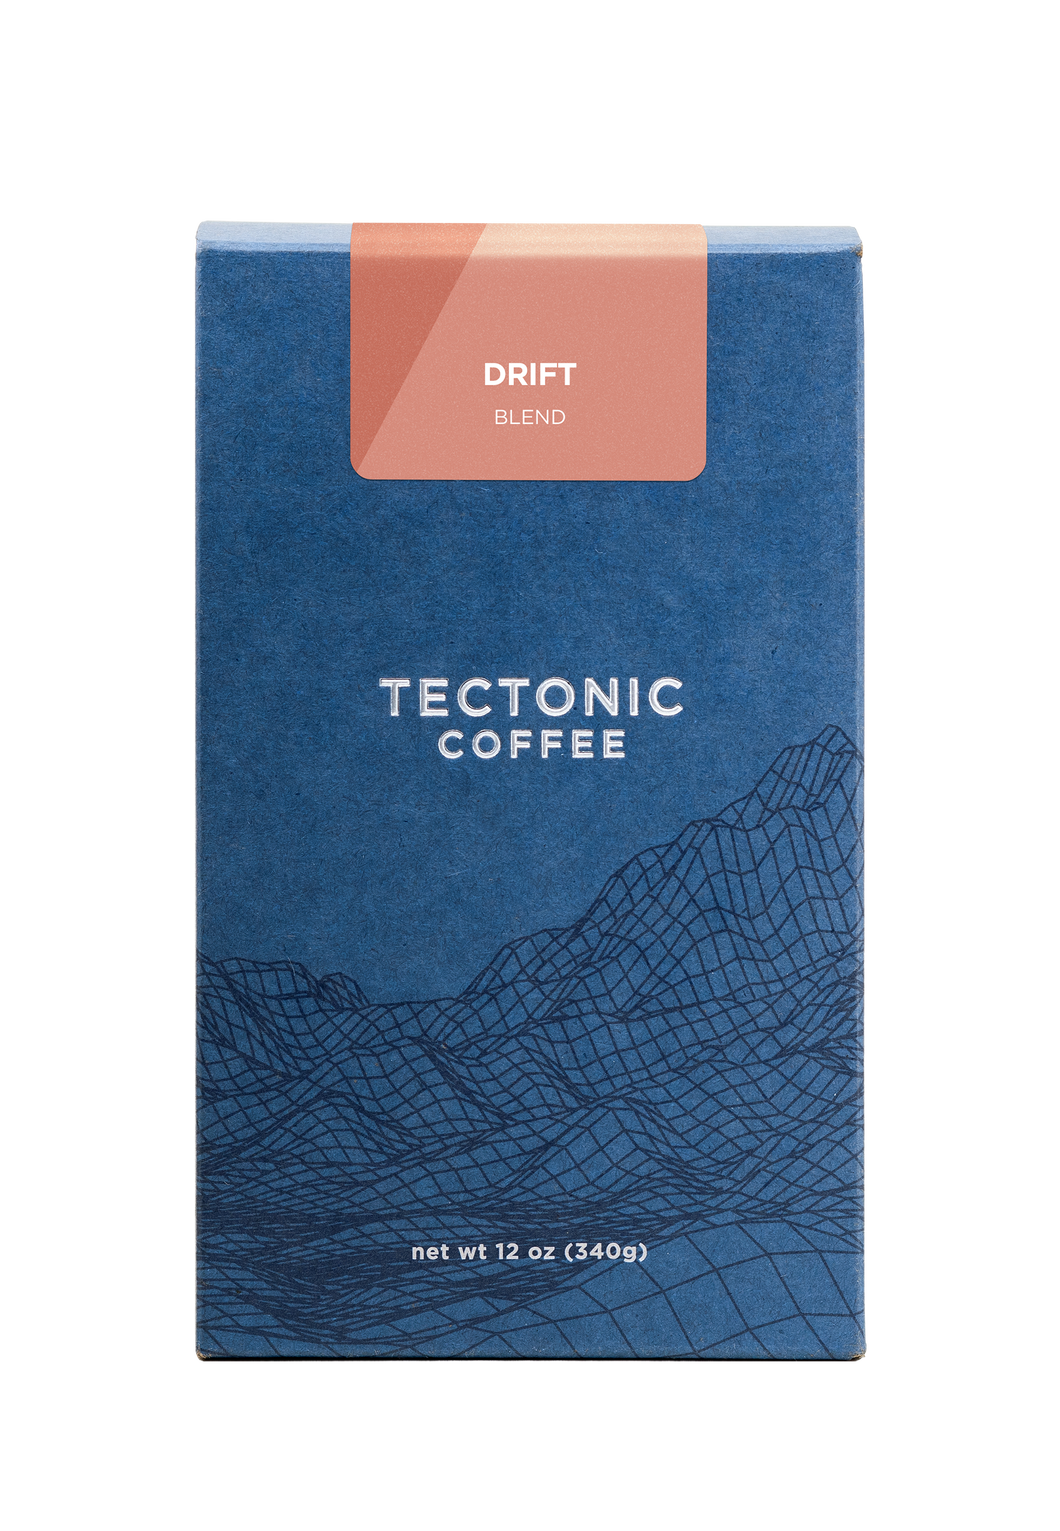 Tectonic Coffee Coffee Drift Blend 12oz